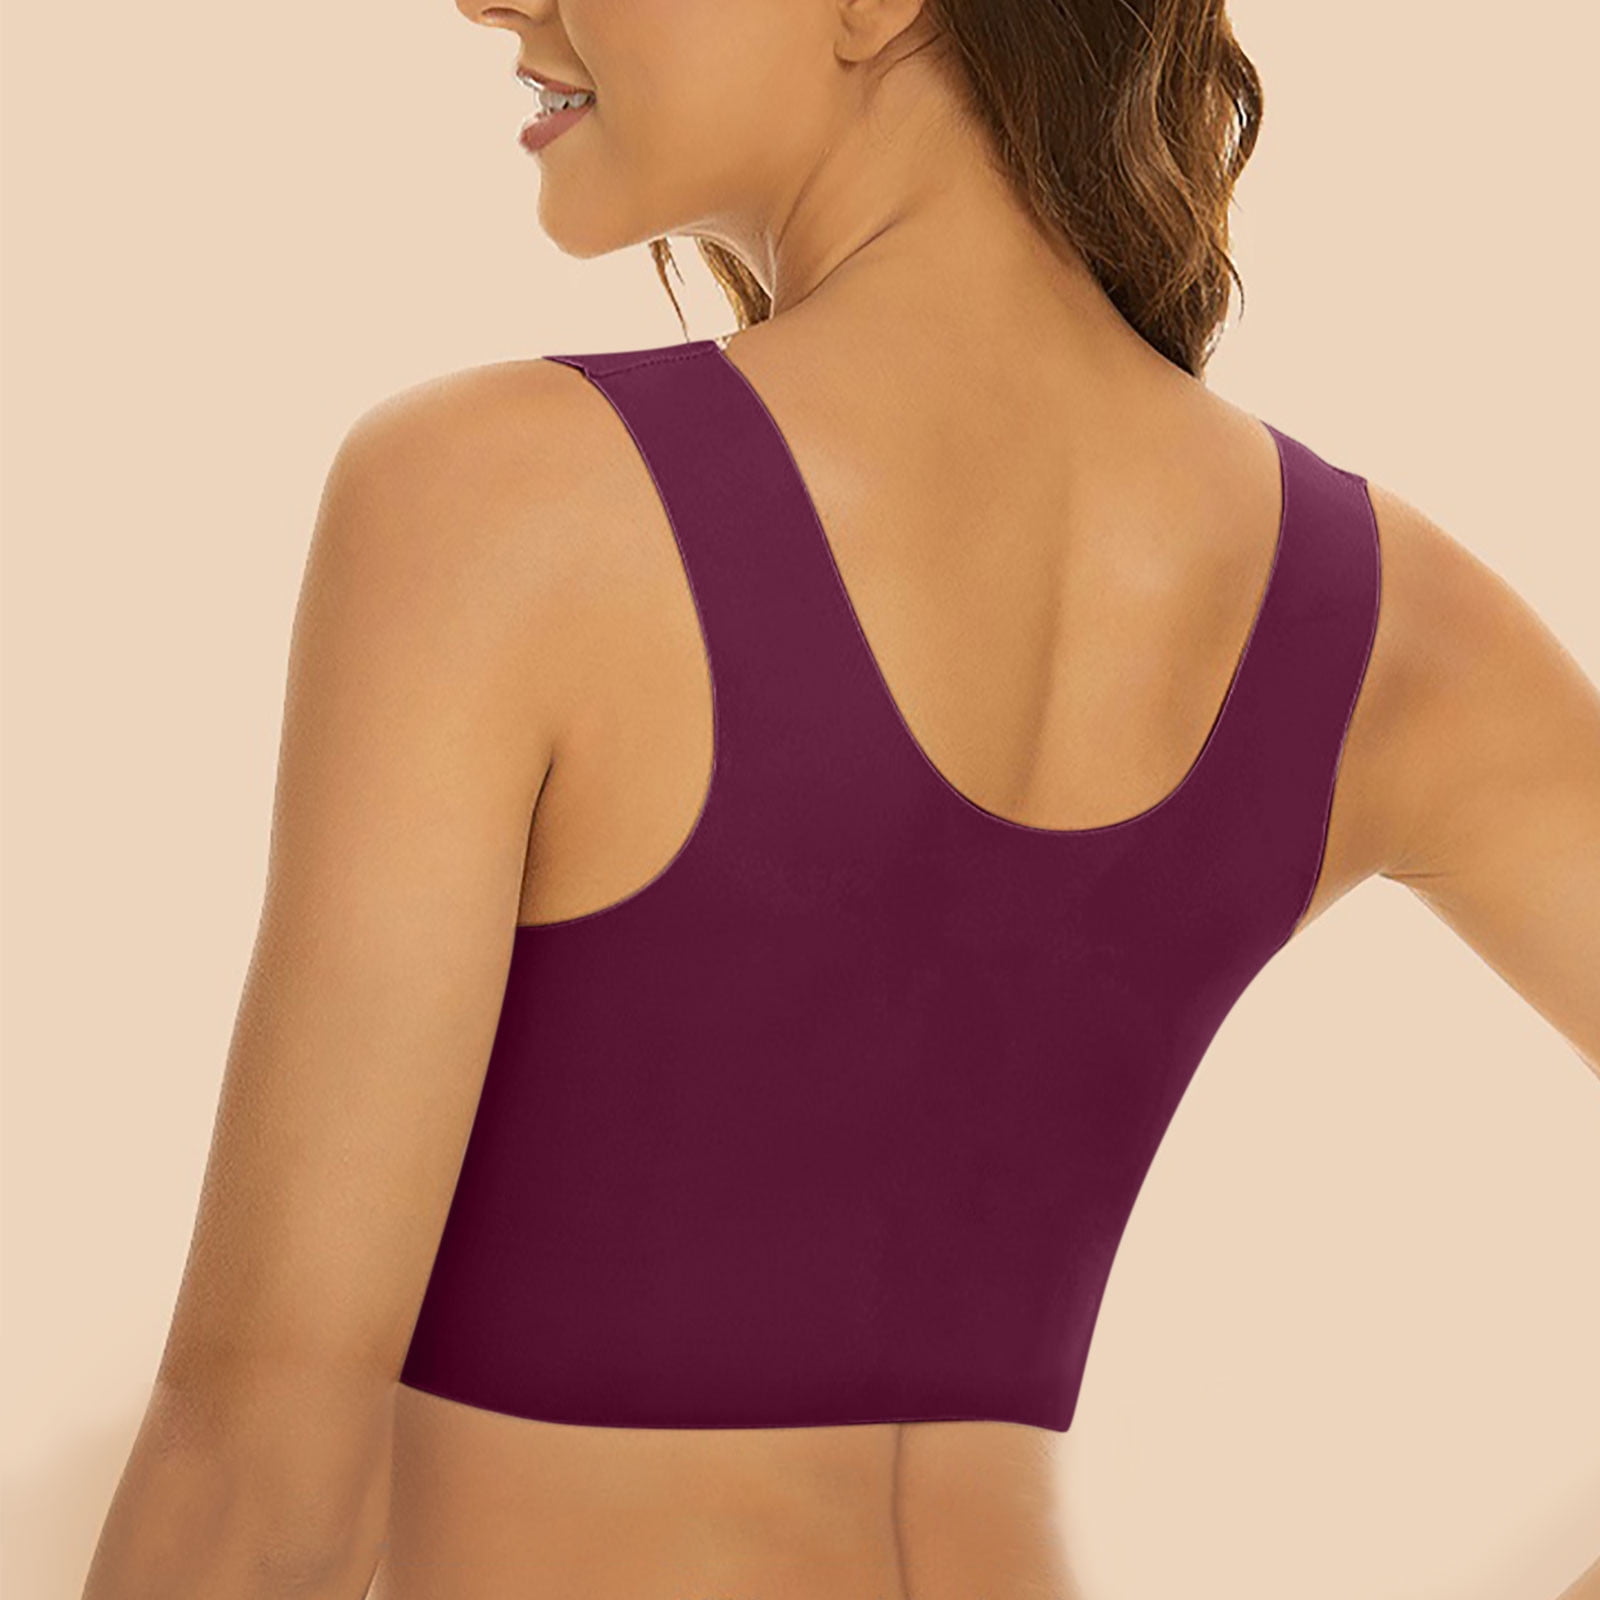 FAFWYP Women's Plus Size Comfort Strap Wireless Lace Bras for